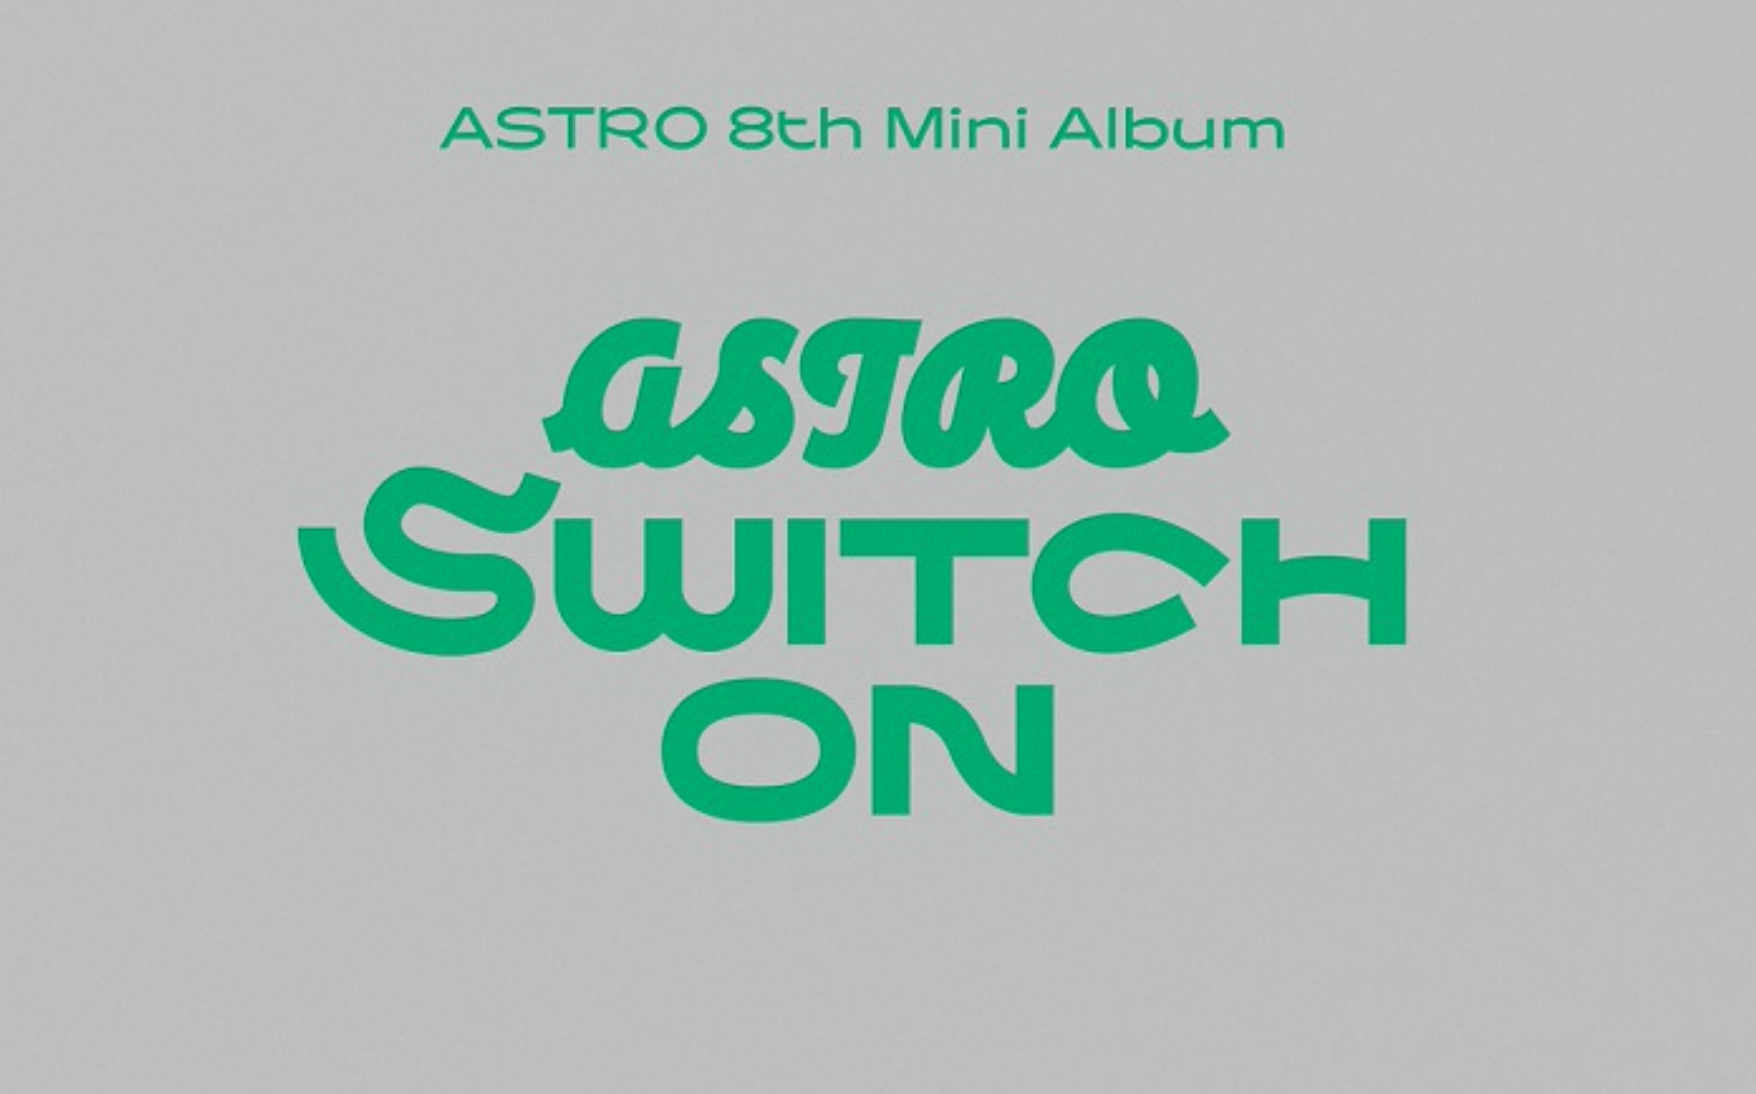 ASTRO 8th Mini Album "SWITCH ON"